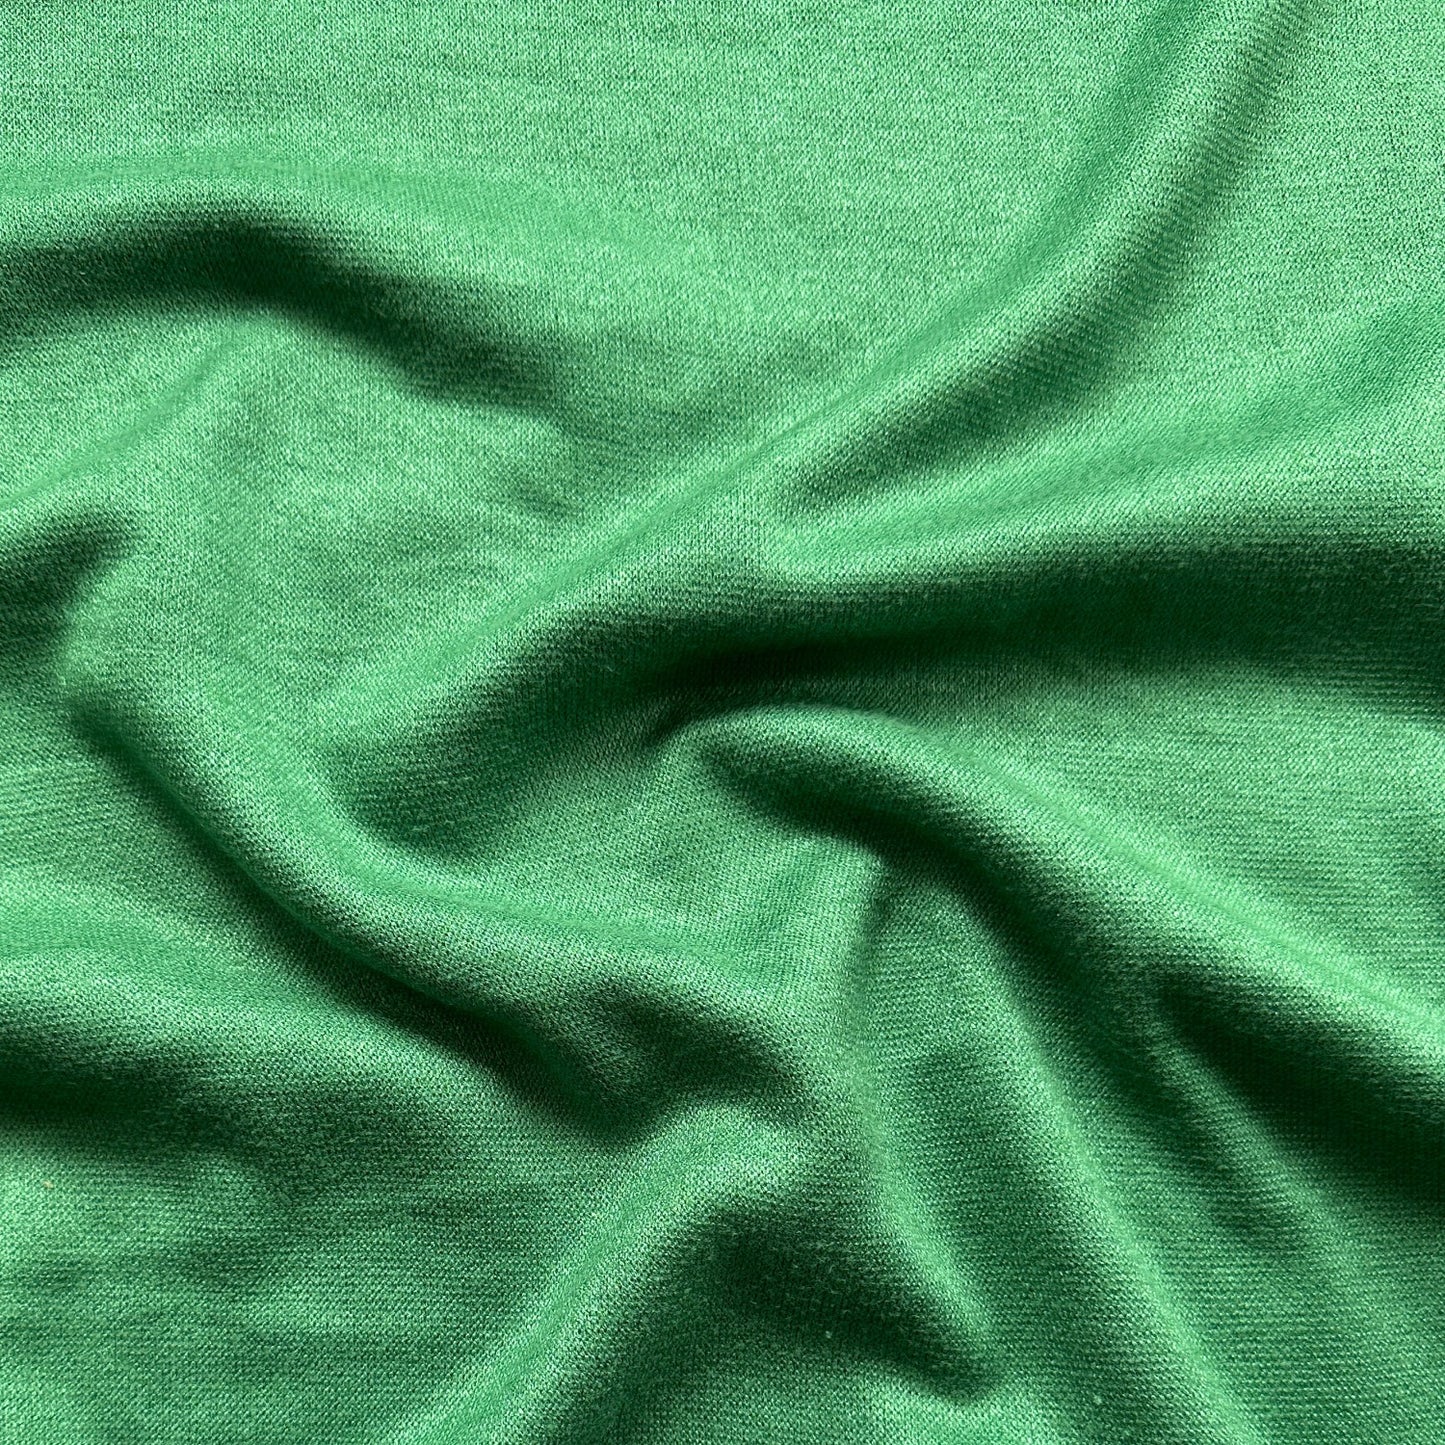 Viscose Blend Knit Fabric in Green